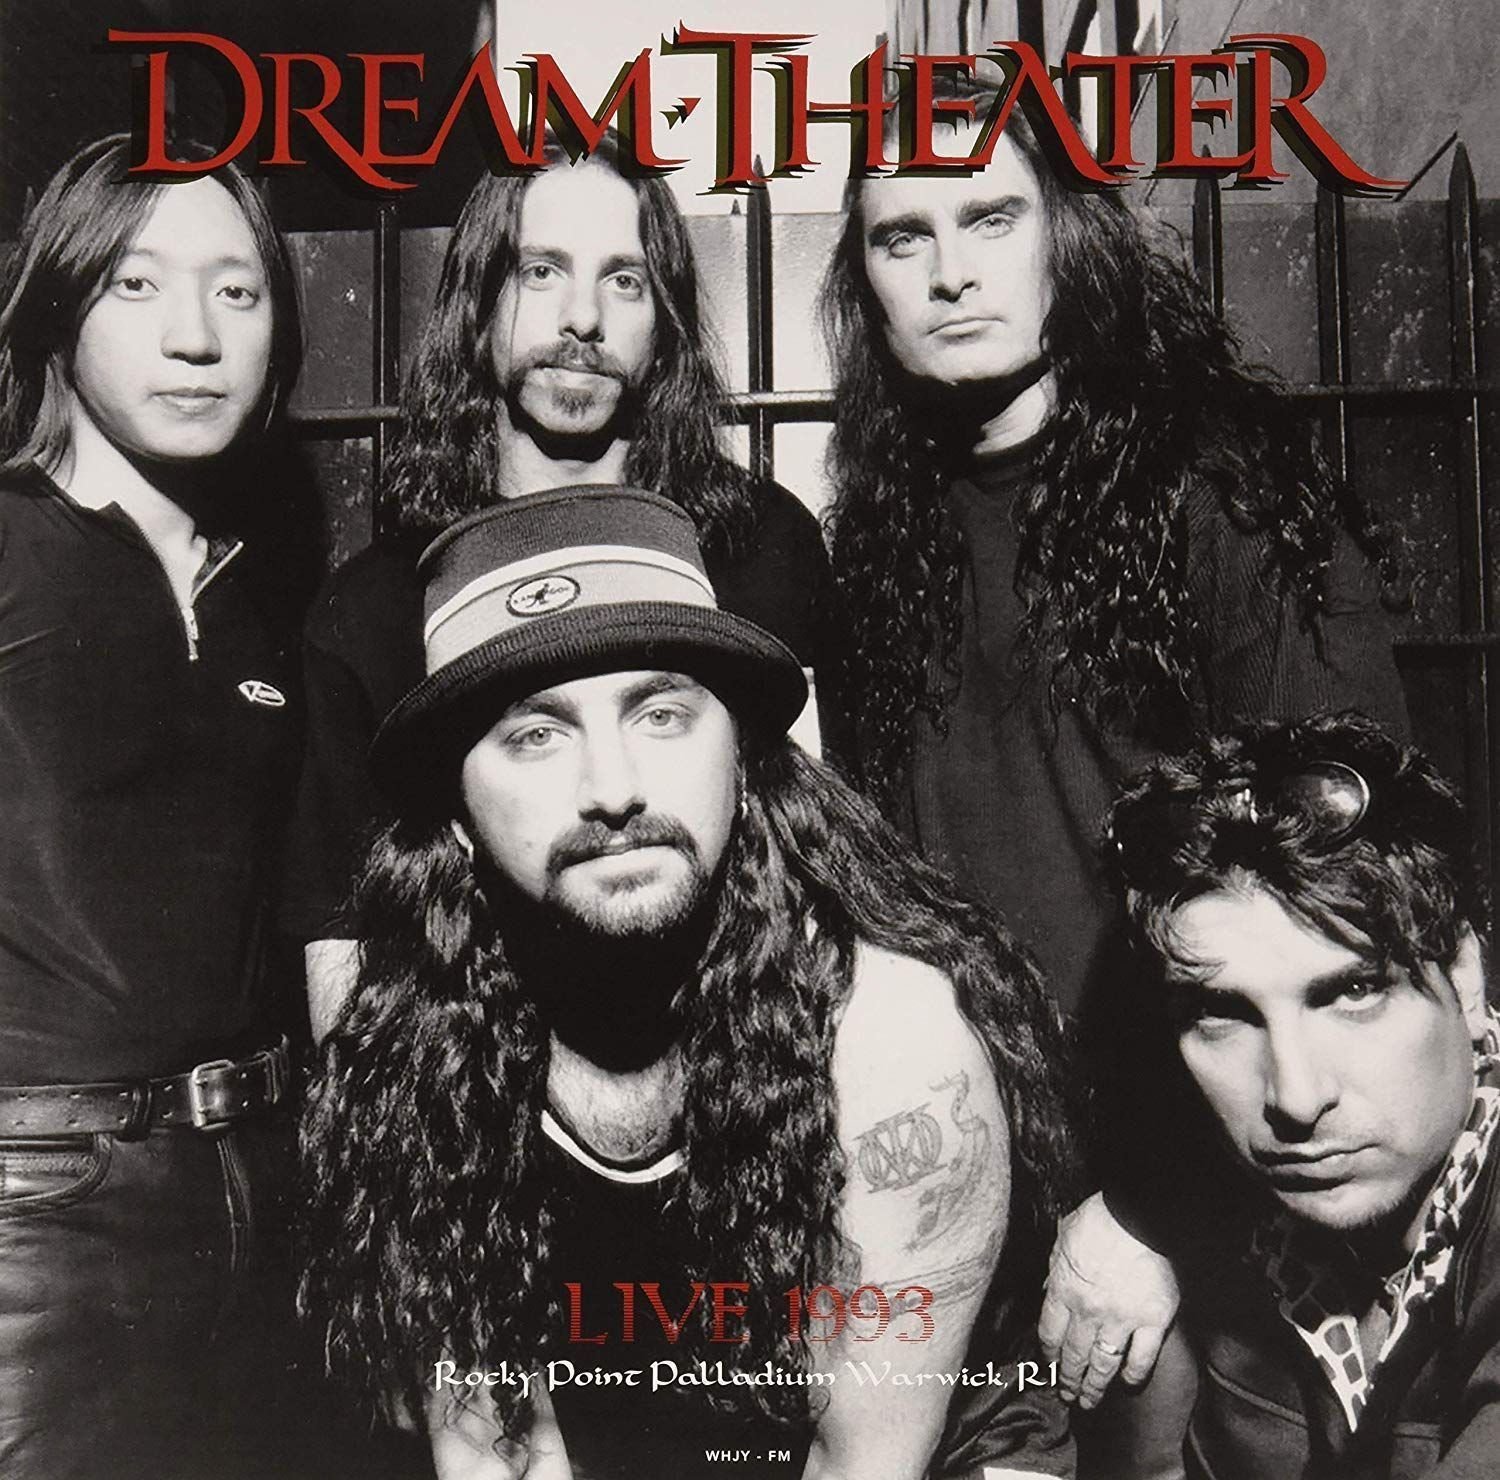 Vinyl Record Dream Theater - Live 1993: Rocky Point Palladium, Warwick, RI (2 LP)